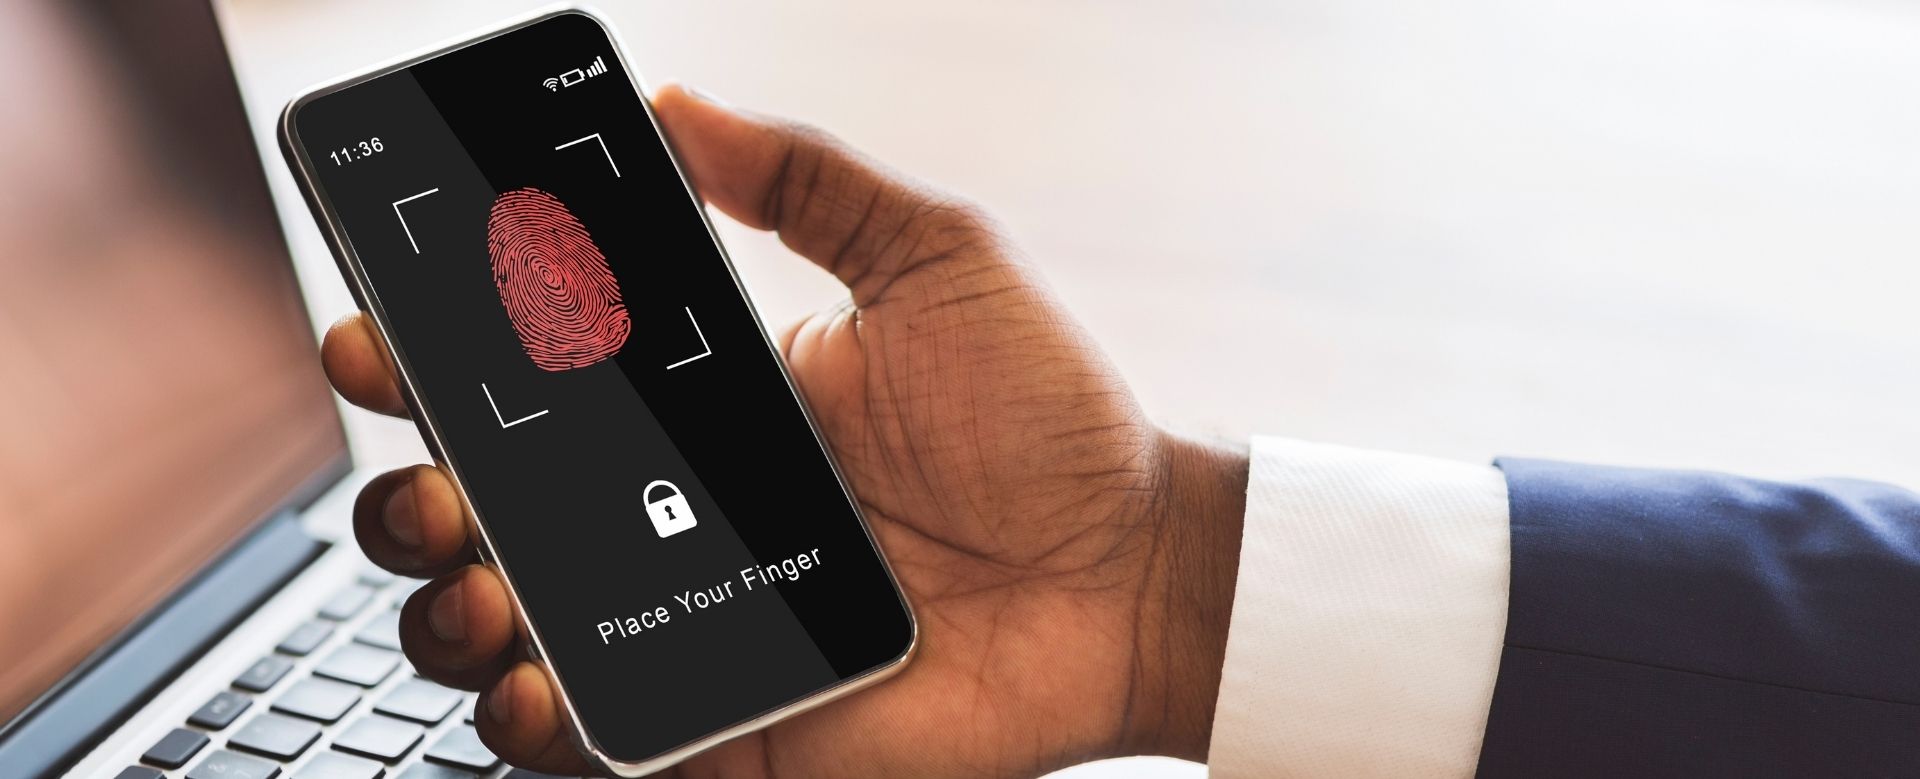 Mobile screen lock with fingerprinting unlocking